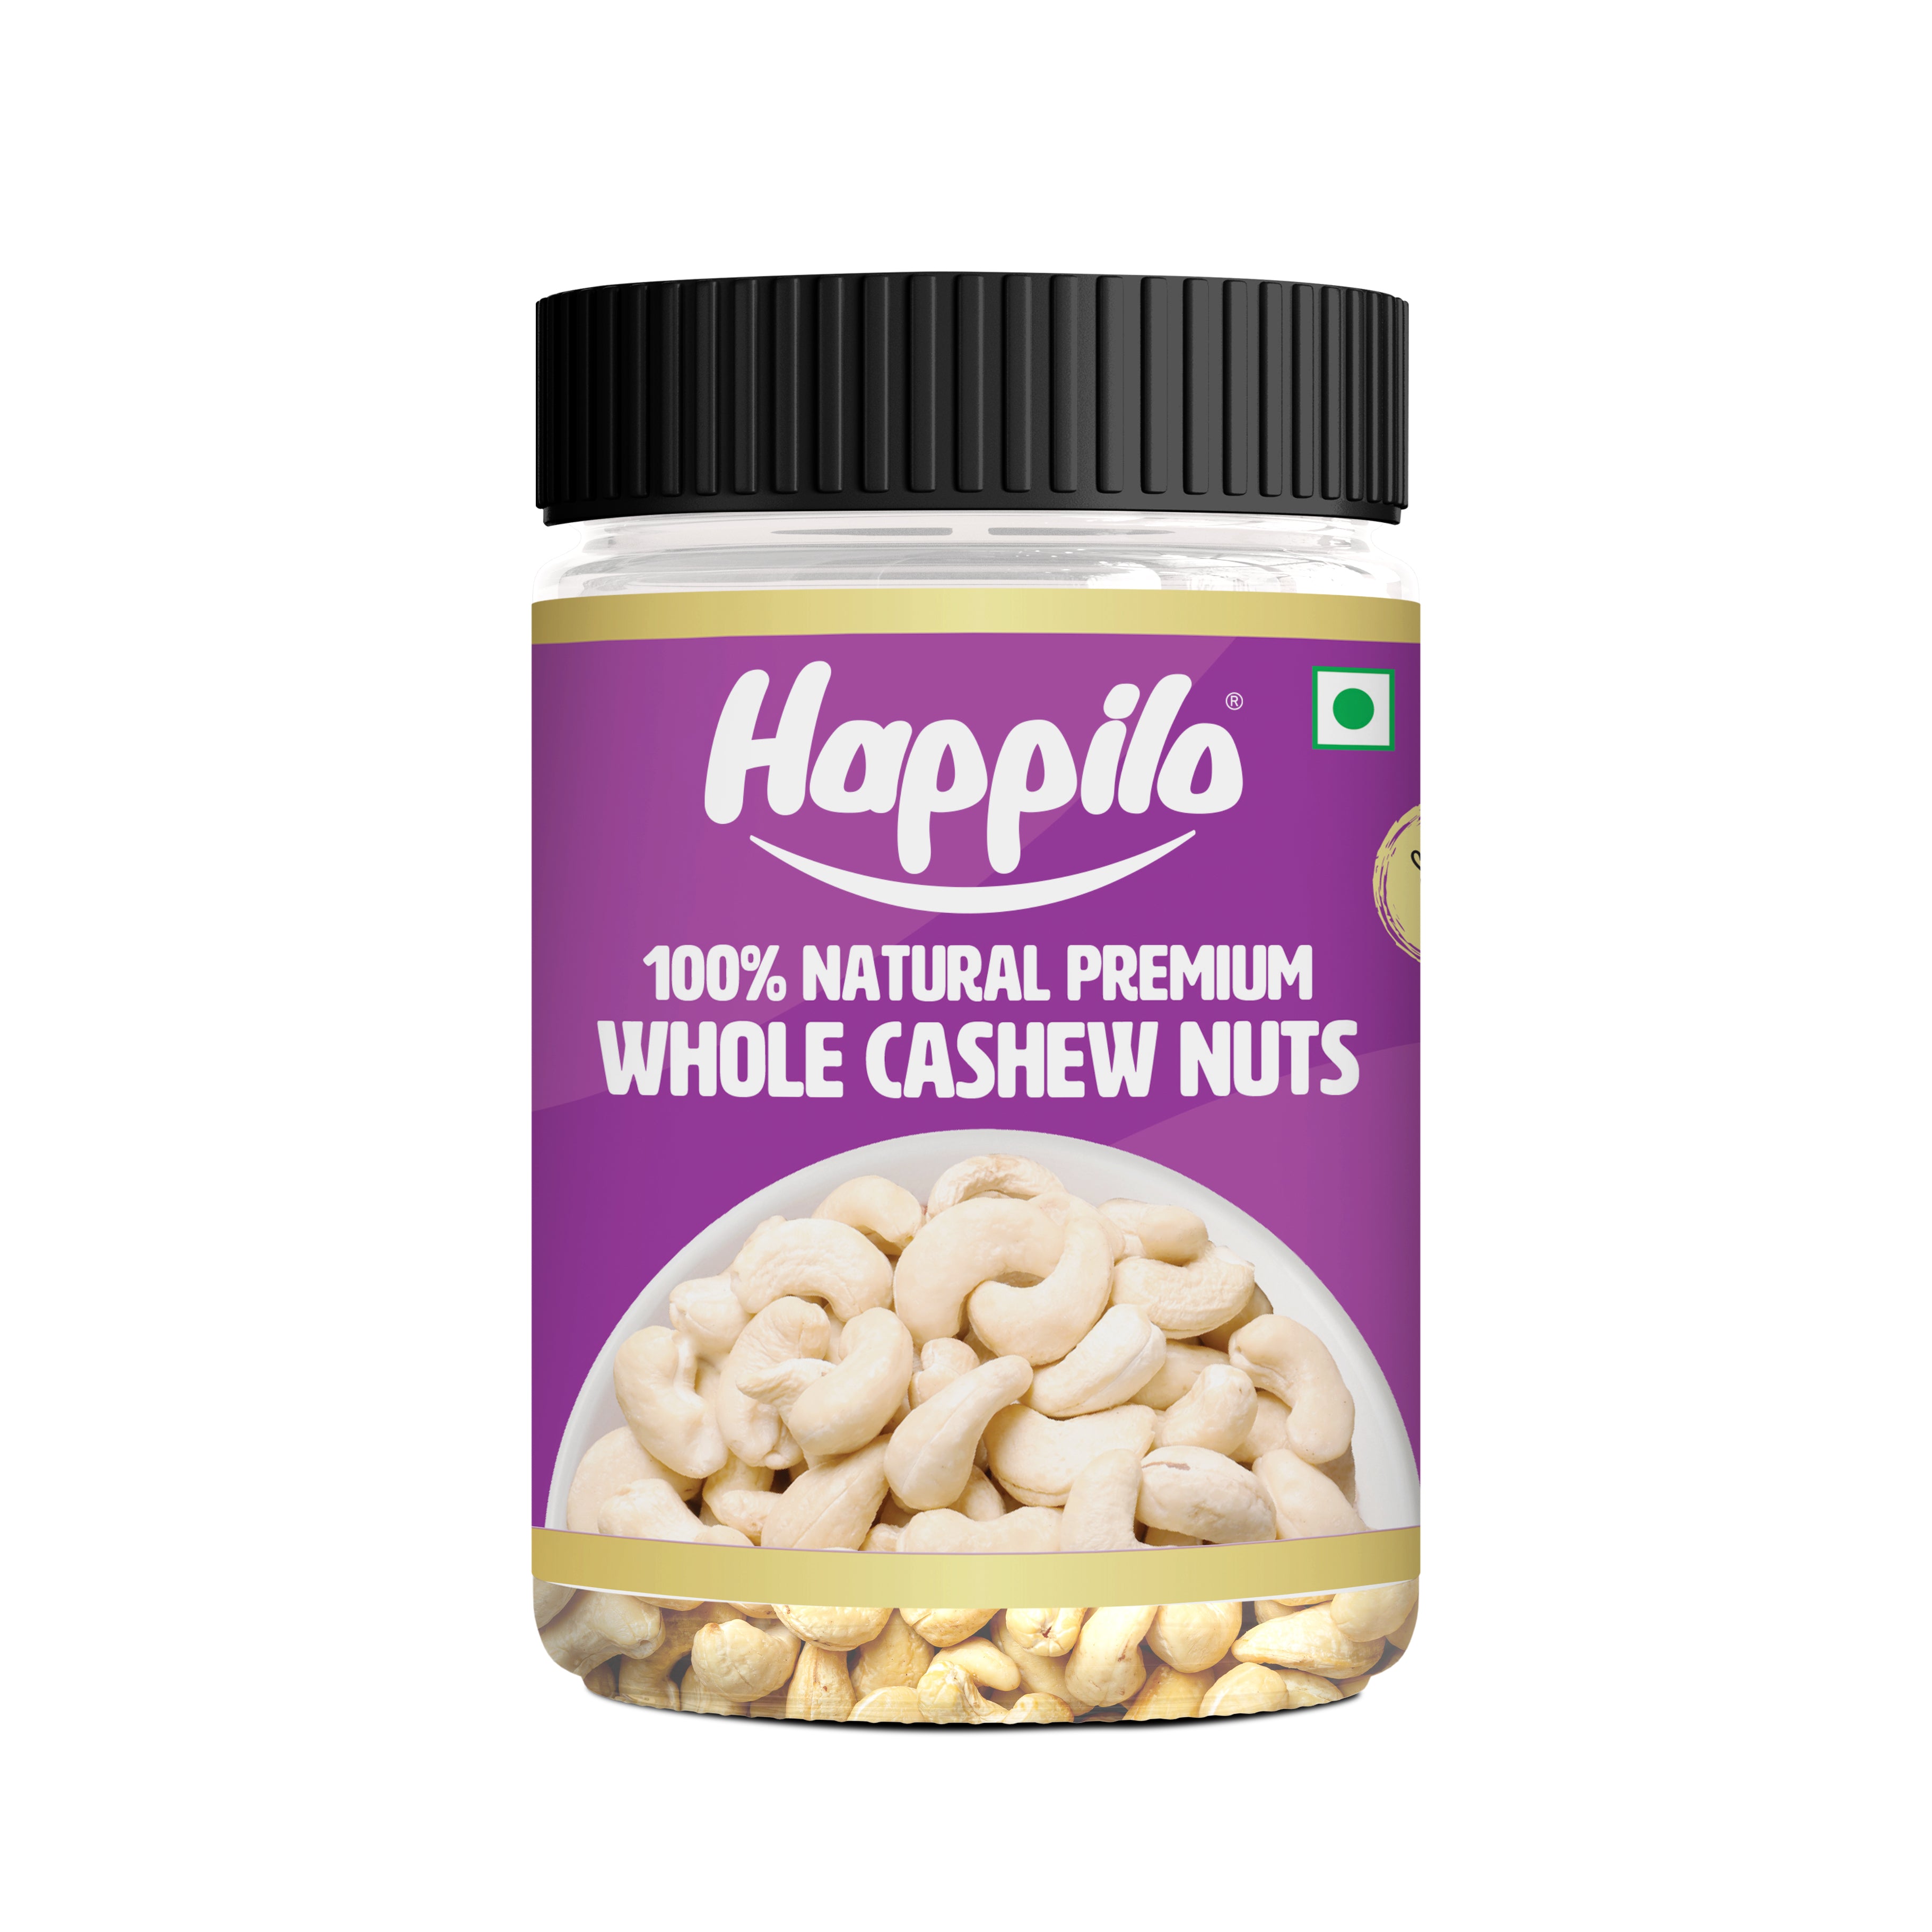 Happilo Premium Natural Whole Cashews 200g Jar